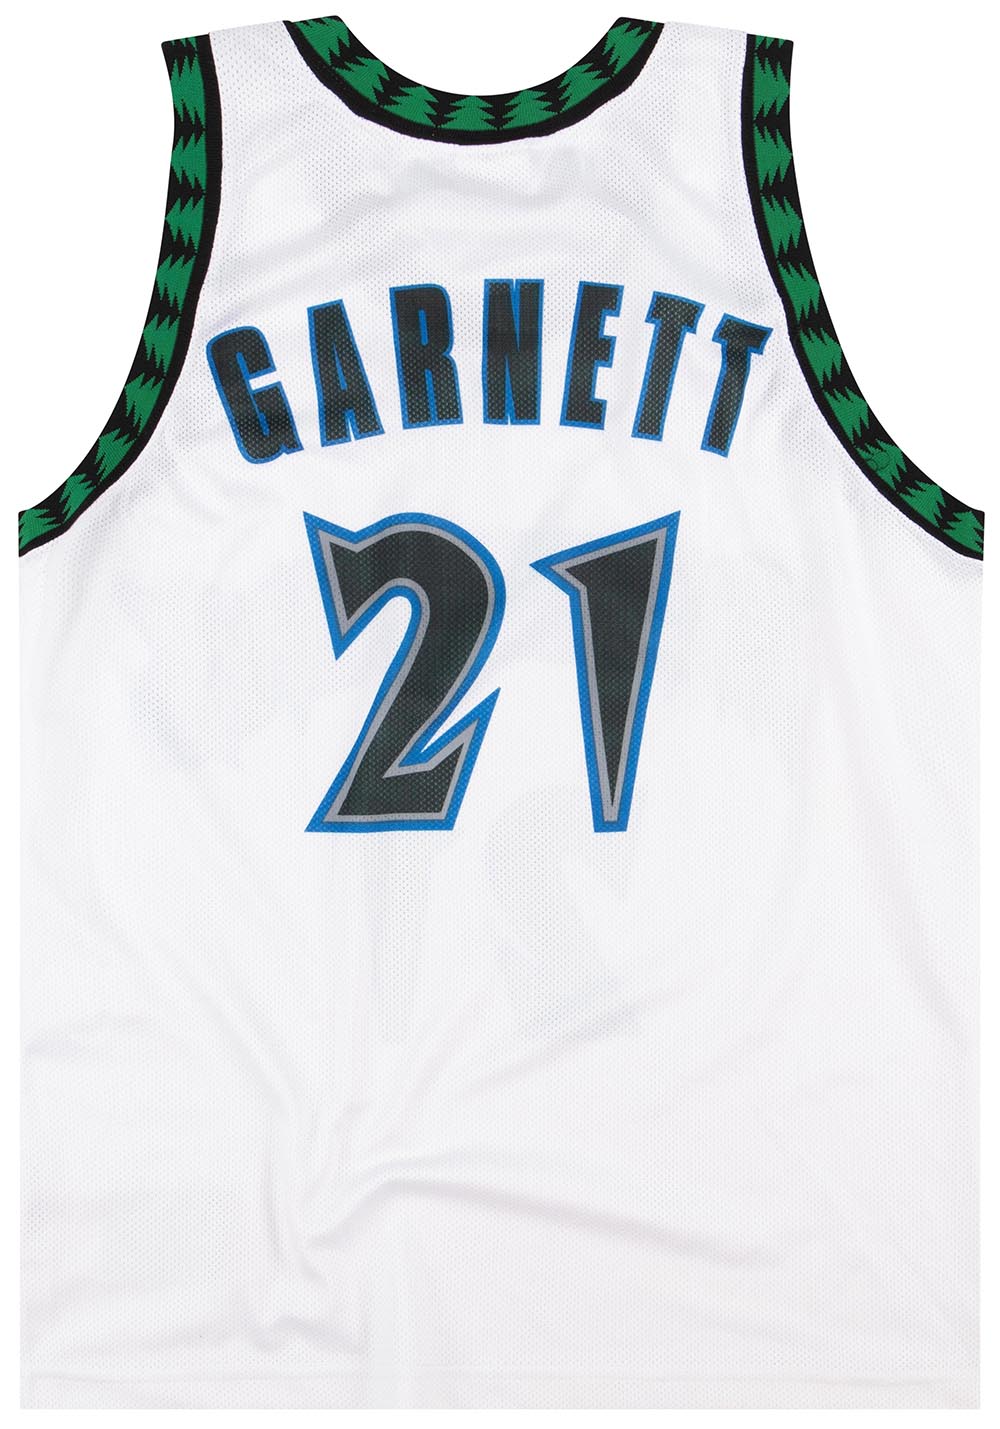 Kevin Garnett 5 Boston Celtics Authentic NBA Adidas Swingman -  Israel